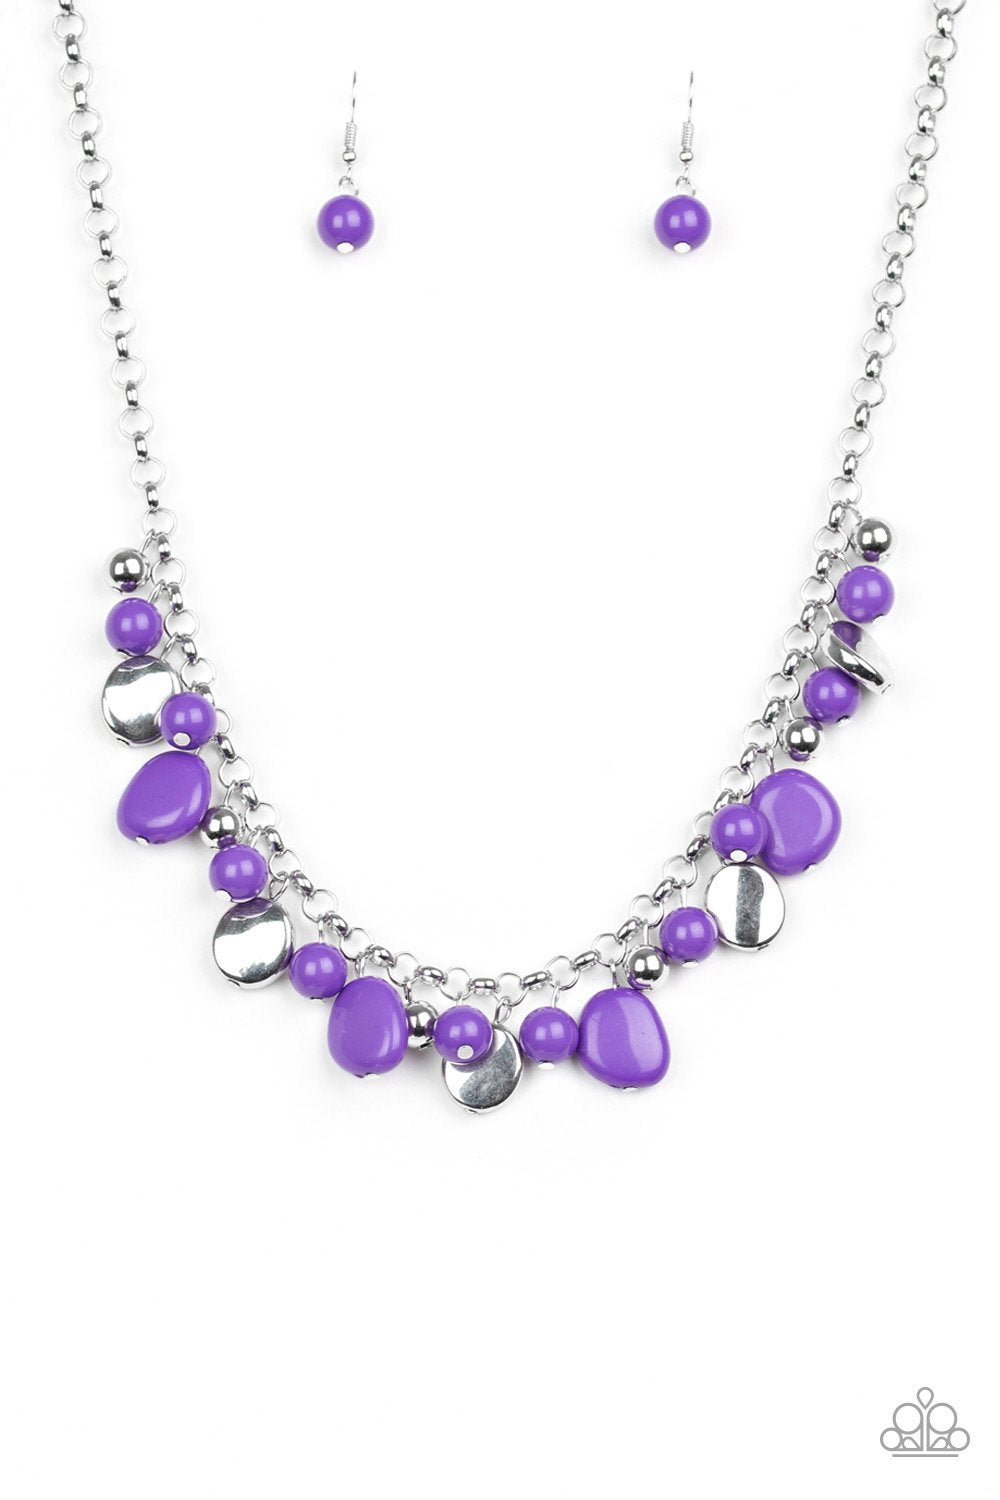 Flirtatiously Florida Purple Necklace